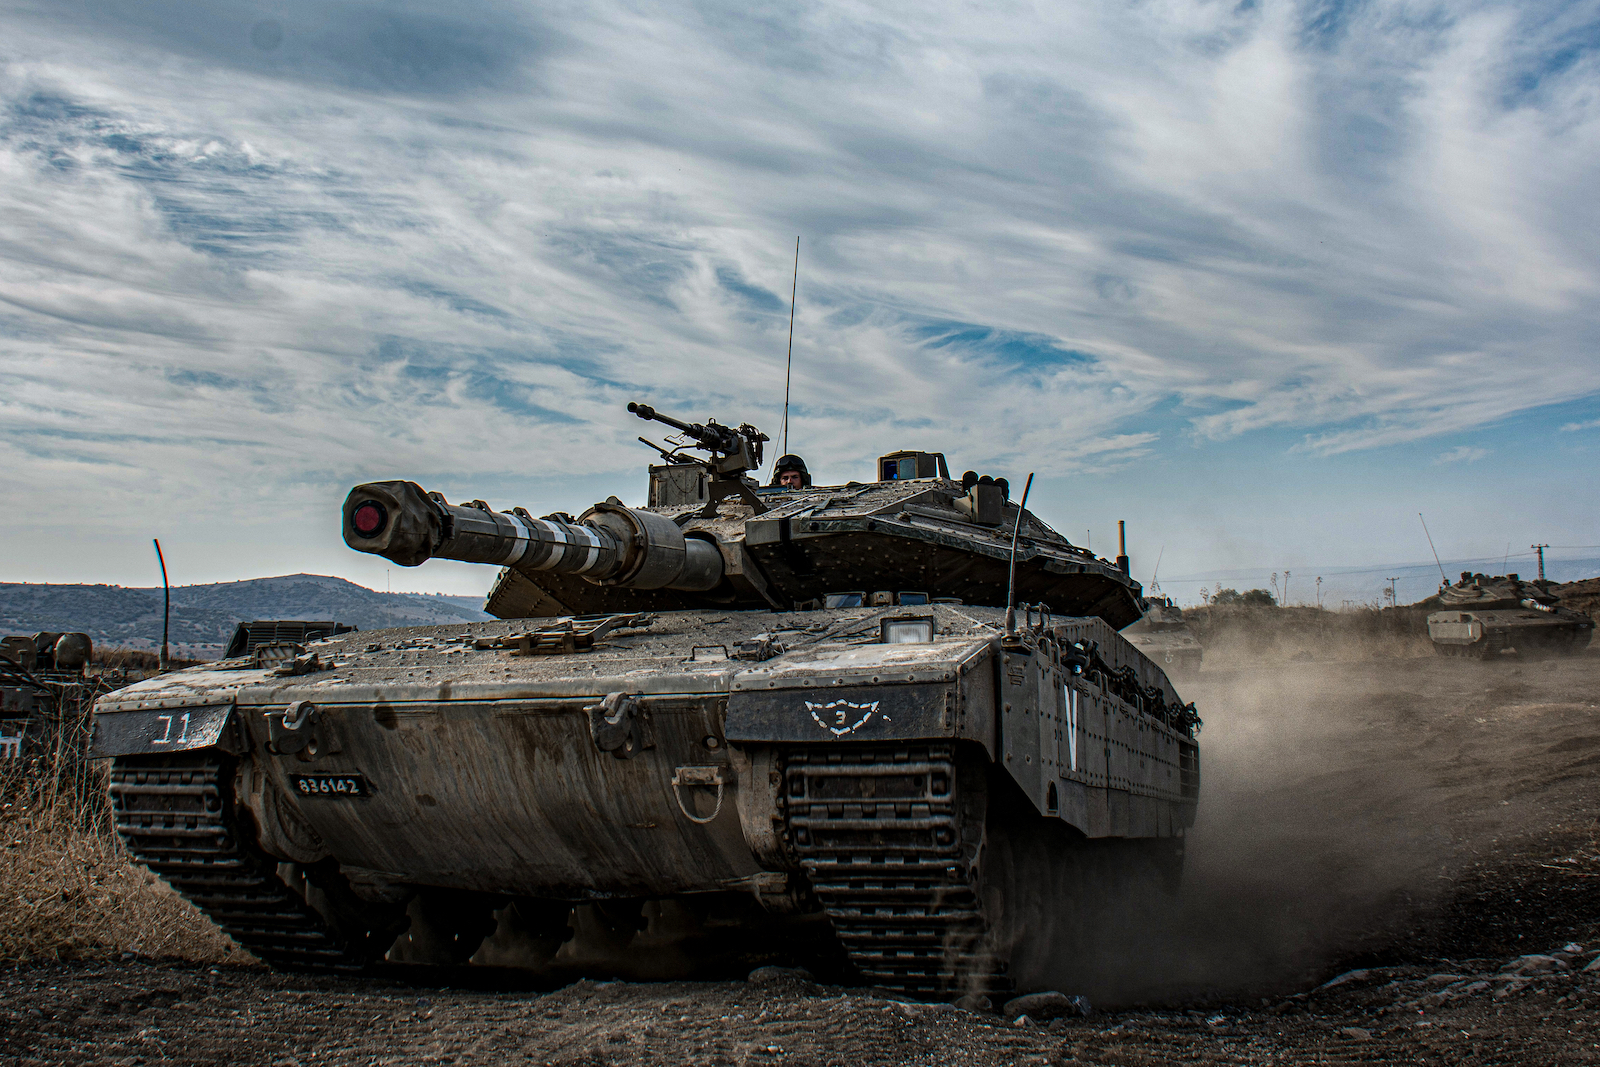 Israeli tanks like the Merkava will flood Gaza during a ground incursion